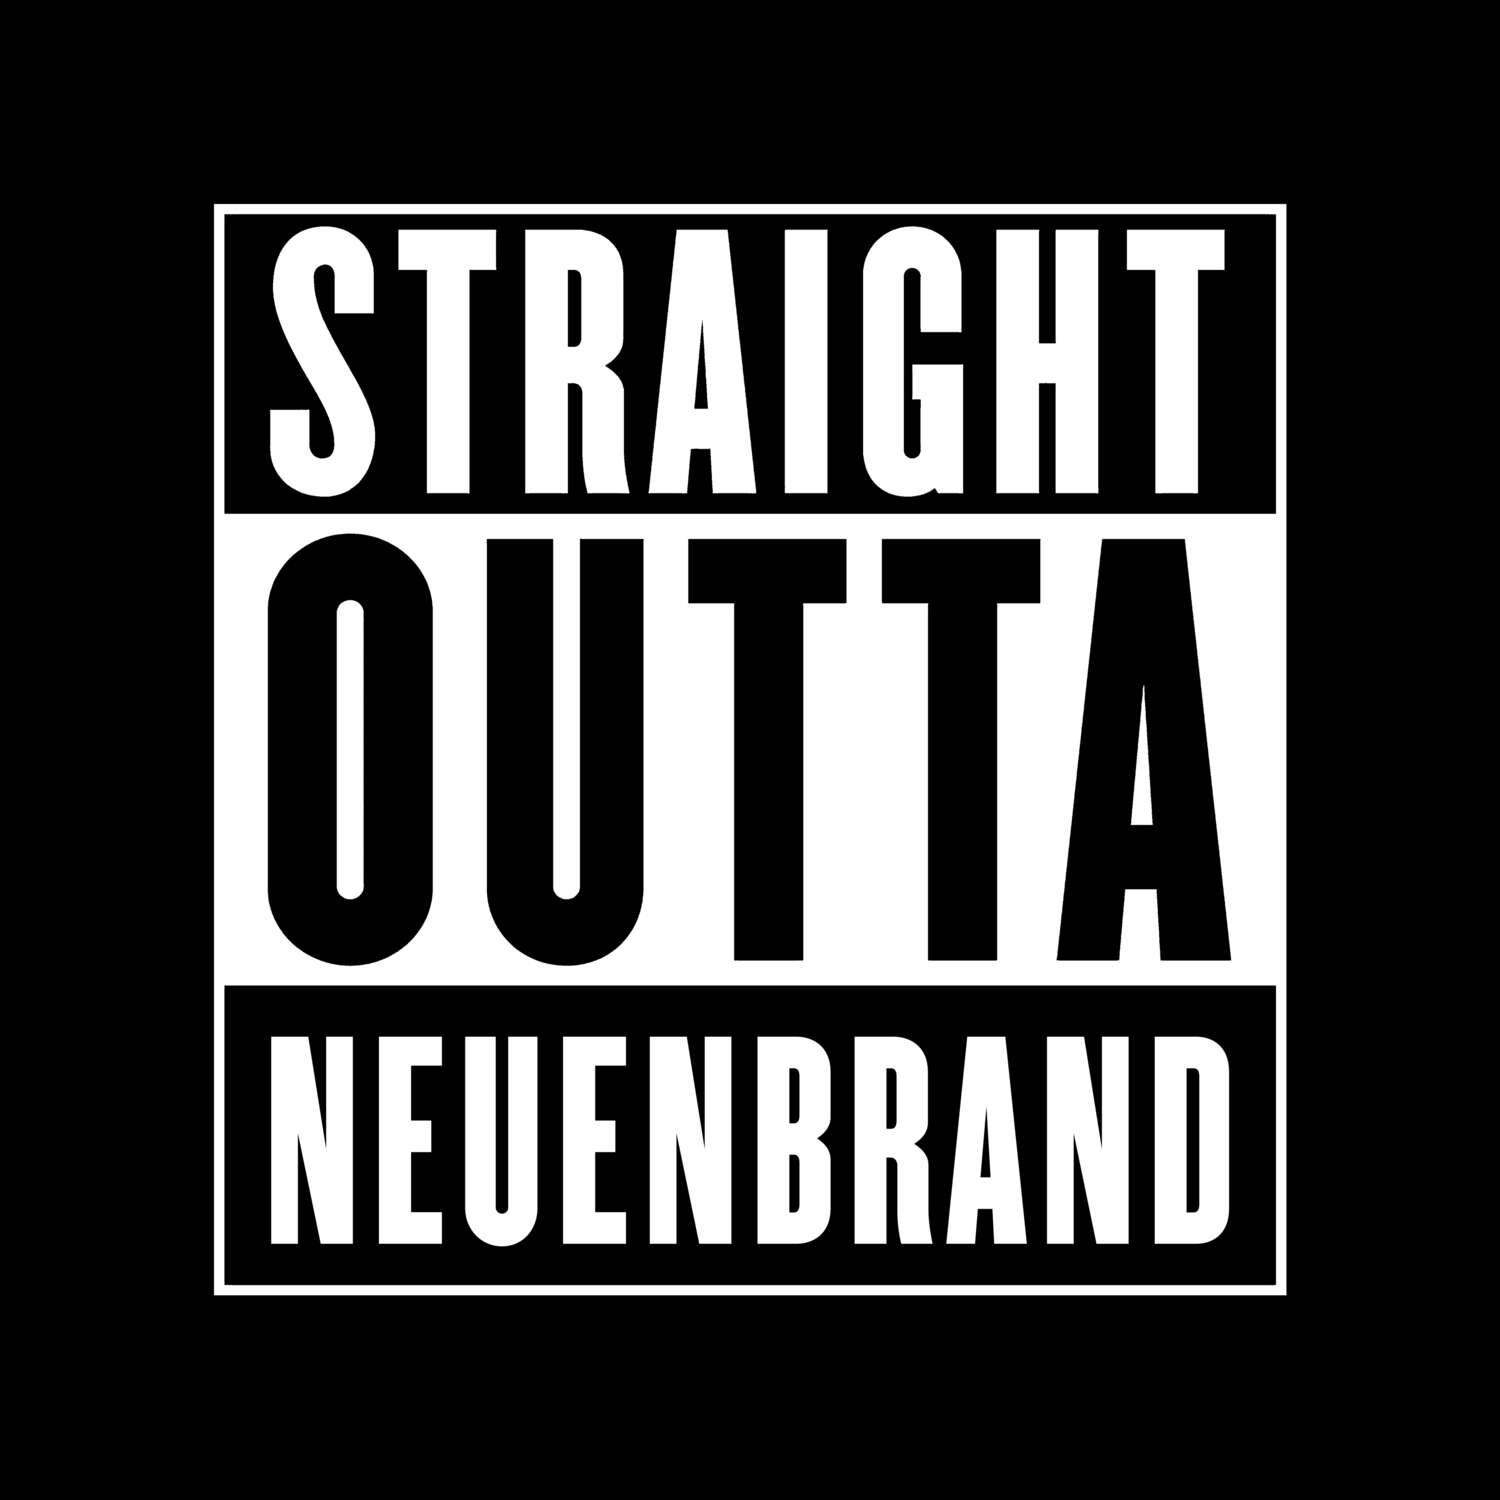 Neuenbrand T-Shirt »Straight Outta«